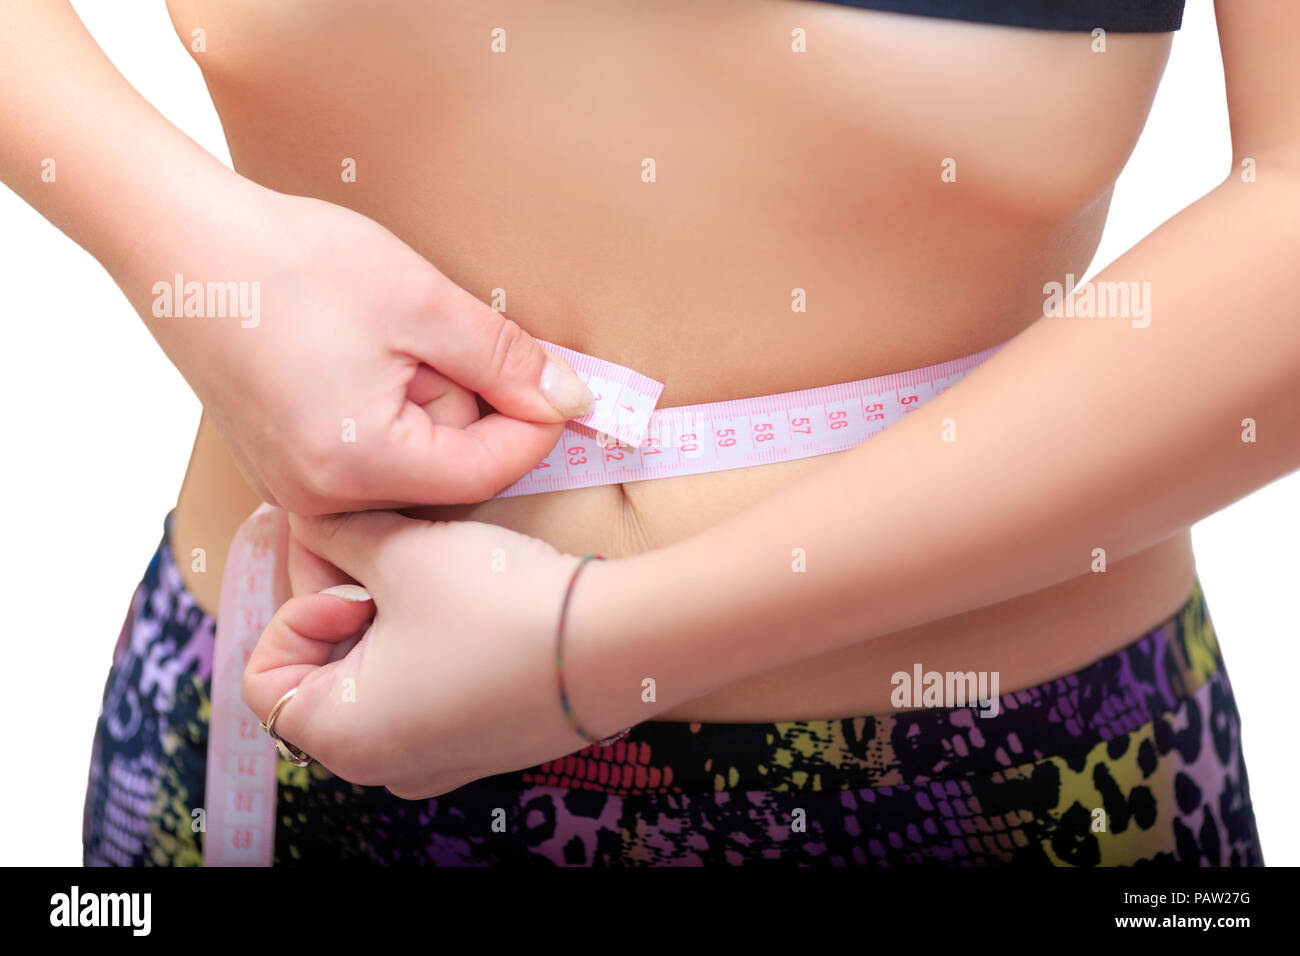 La Perdida De Peso La Dieta La Chica Mide La Cintura Con Centimetr Ideal Cintura 60cm Fotografia De Stock Alamy